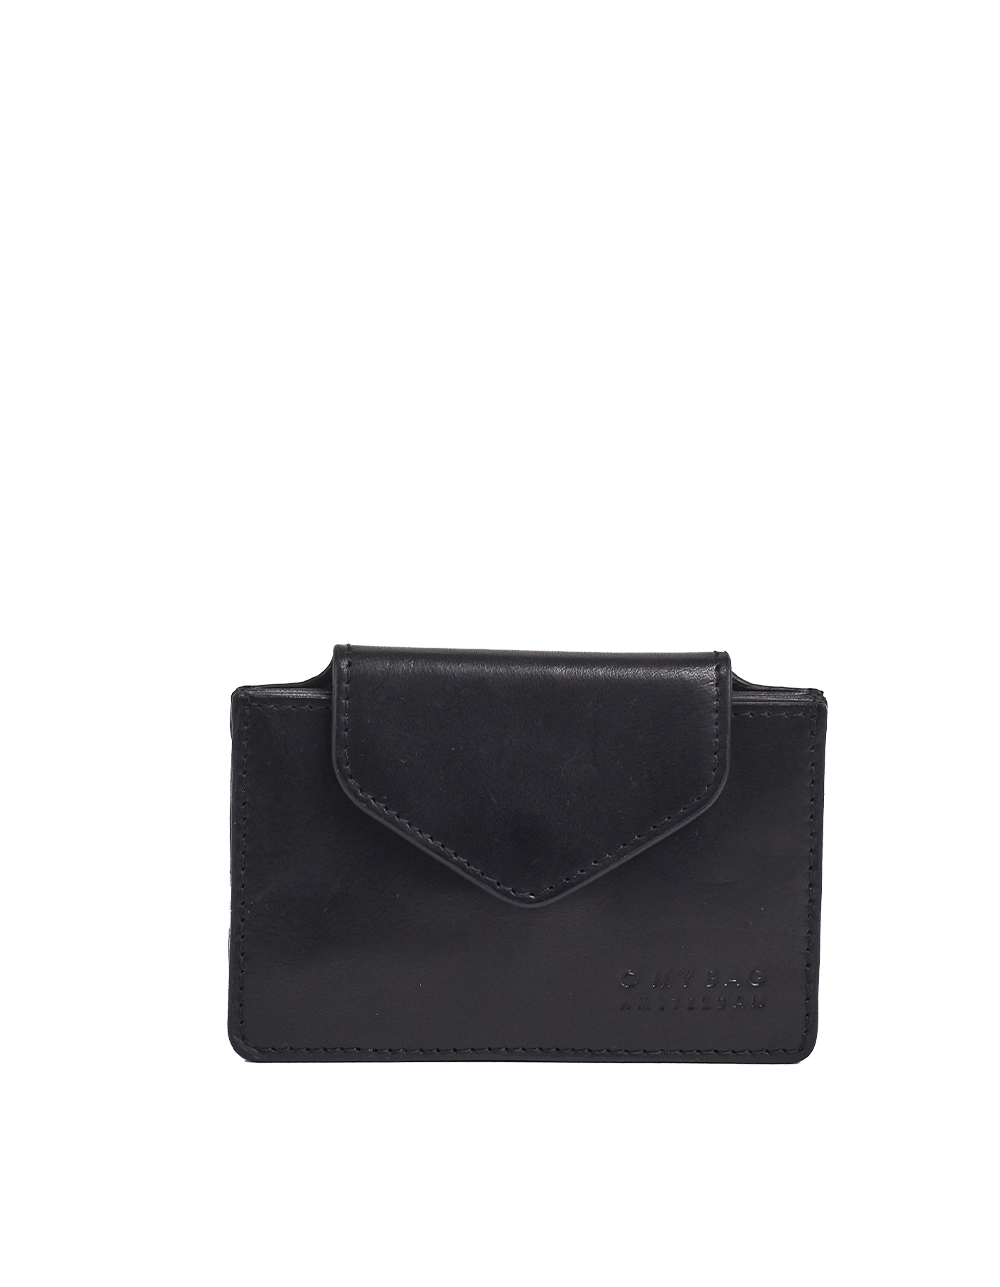 HARMONICA wallet I Black classic leather